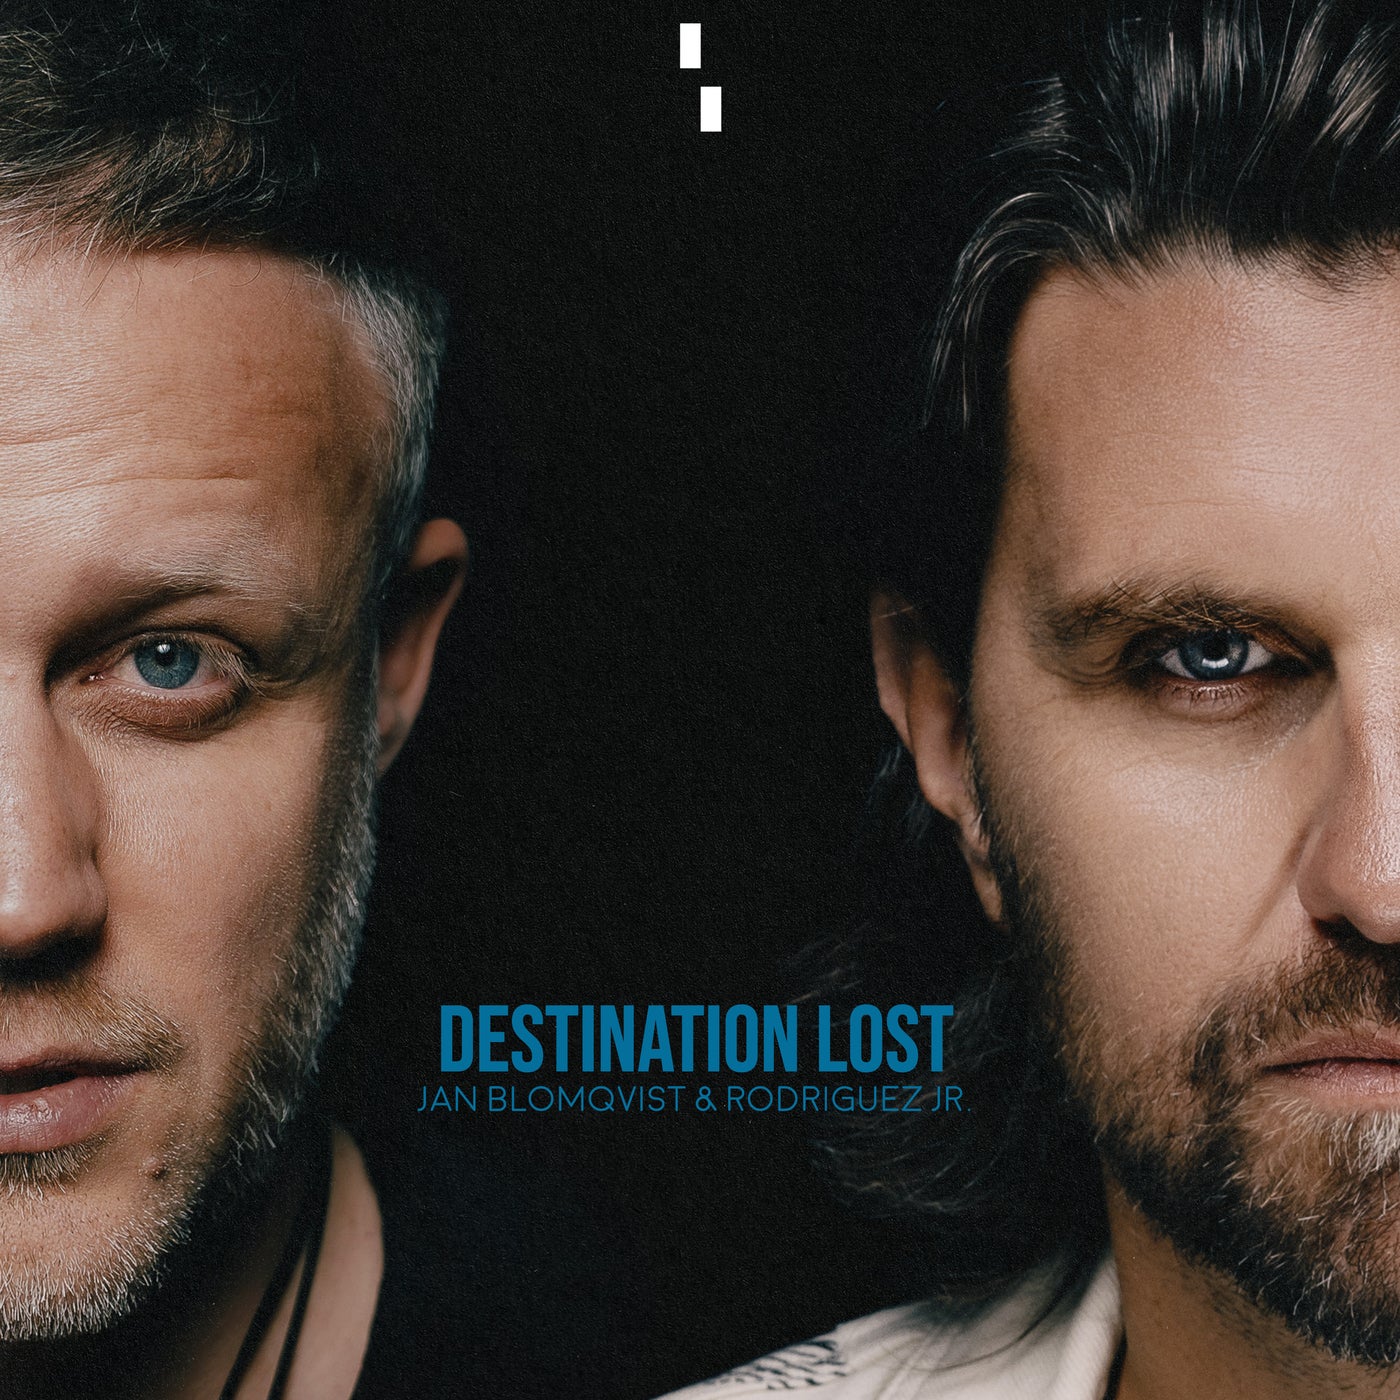 image cover: Rodriguez Jr., Jan Blomqvist - Destination Lost on Disconnected